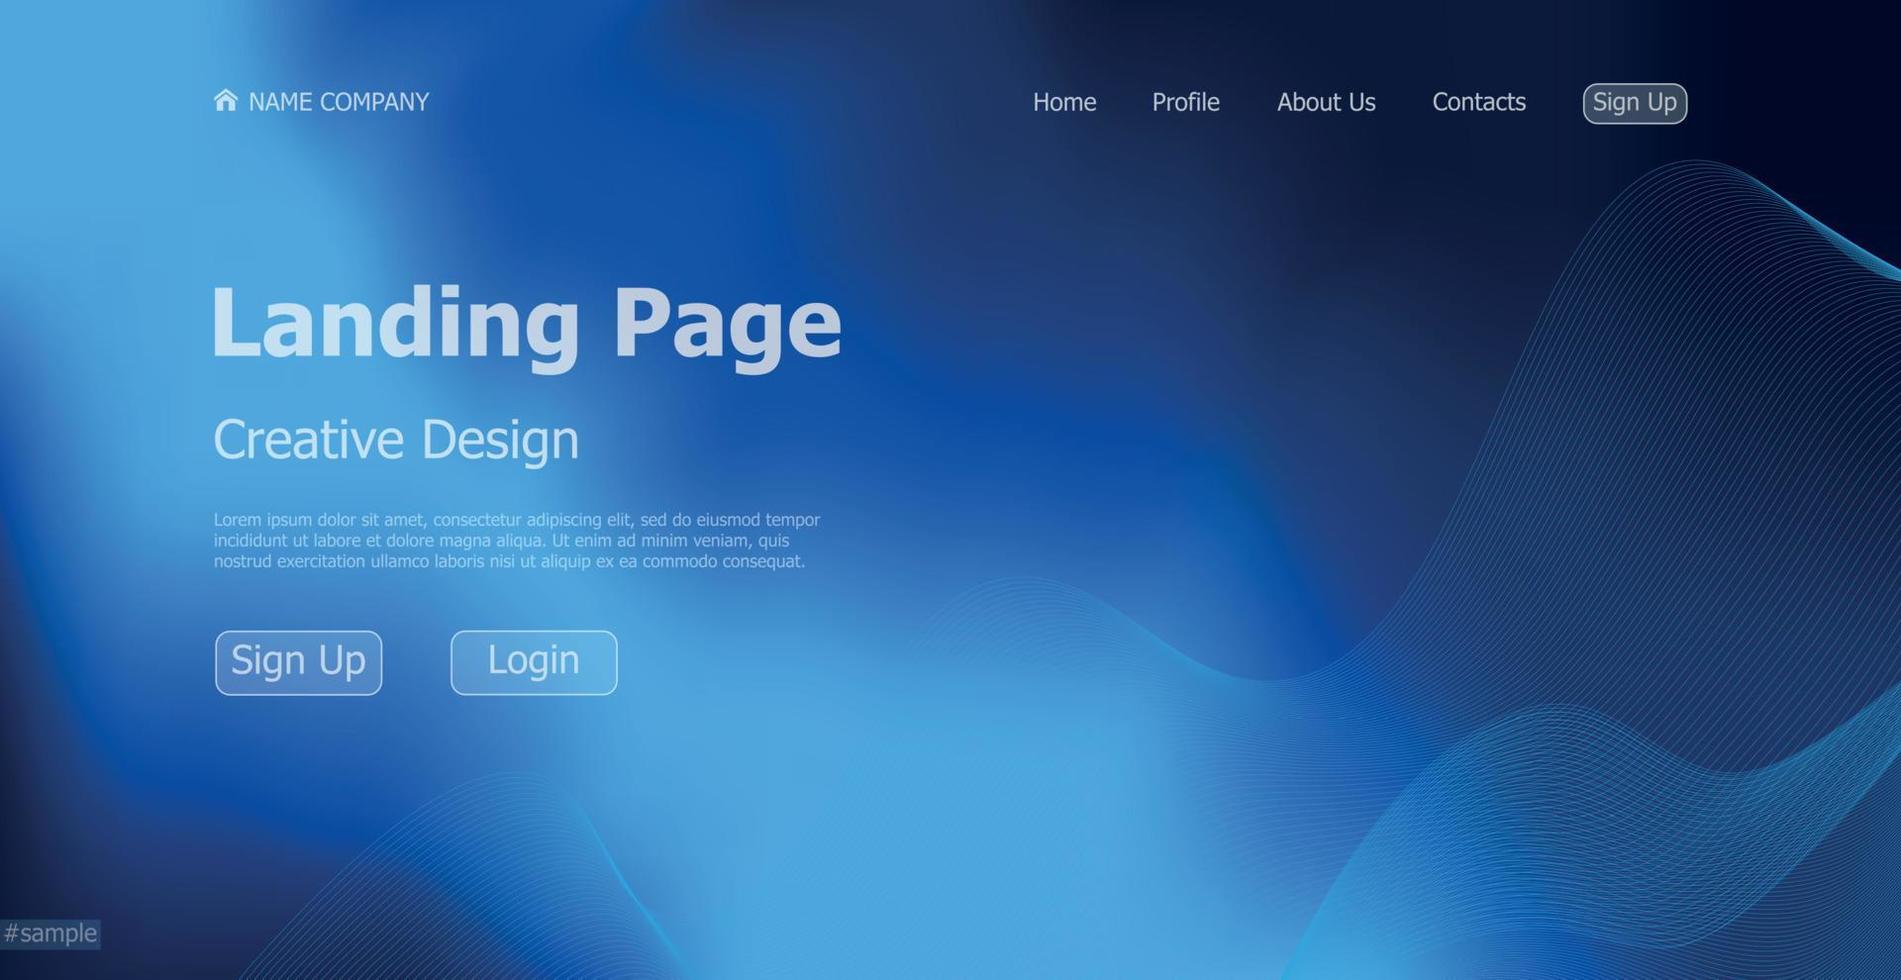 Farbverlauf blau Web Template Landing Page Digitales Website Landing Page Designkonzept - Vektor